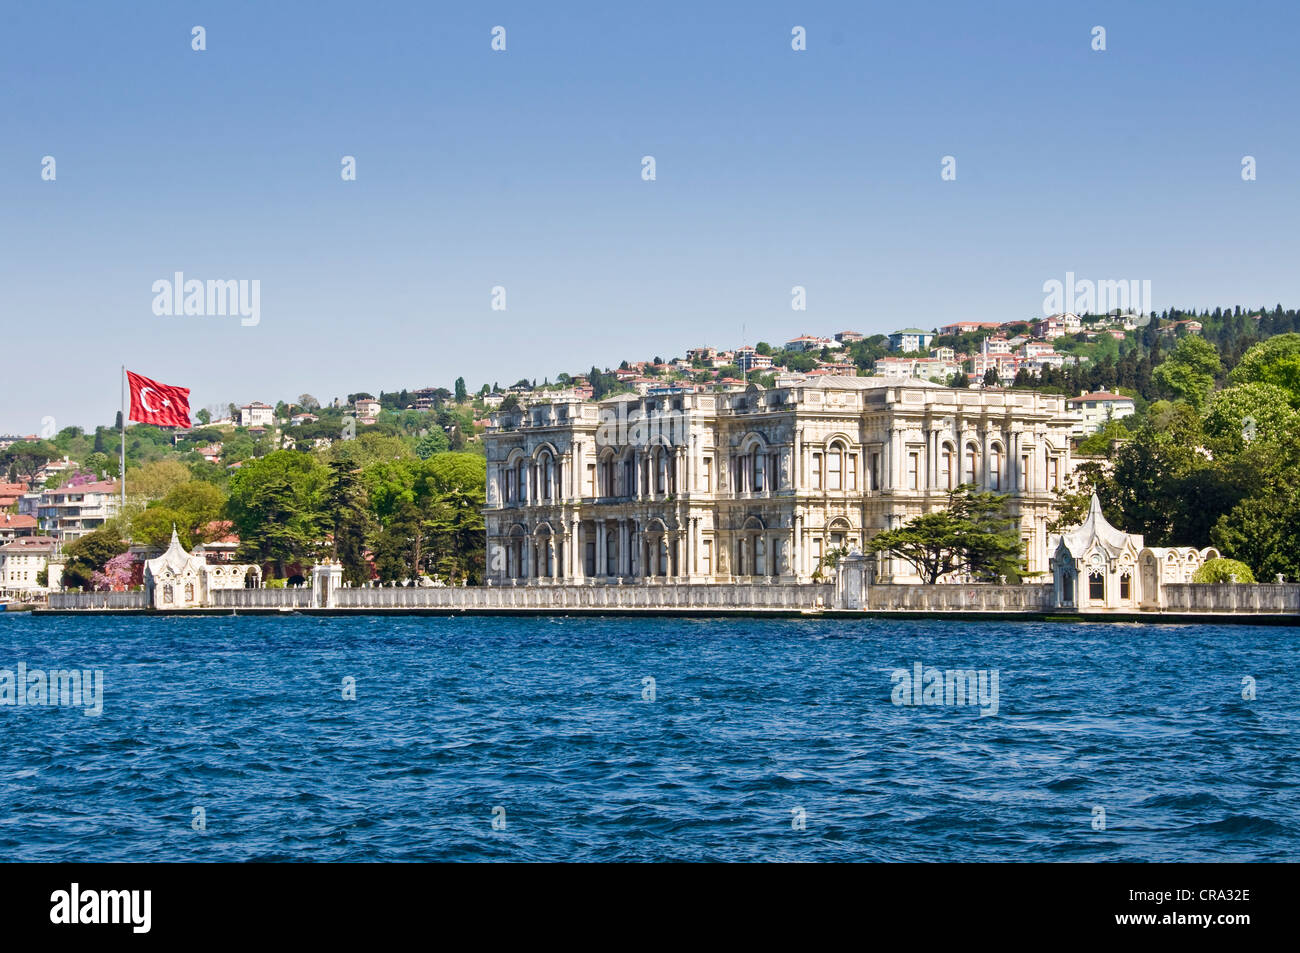 Beylerbeyi palace, view from the Bosphorus - Istanbul, Turkey Stock Photo